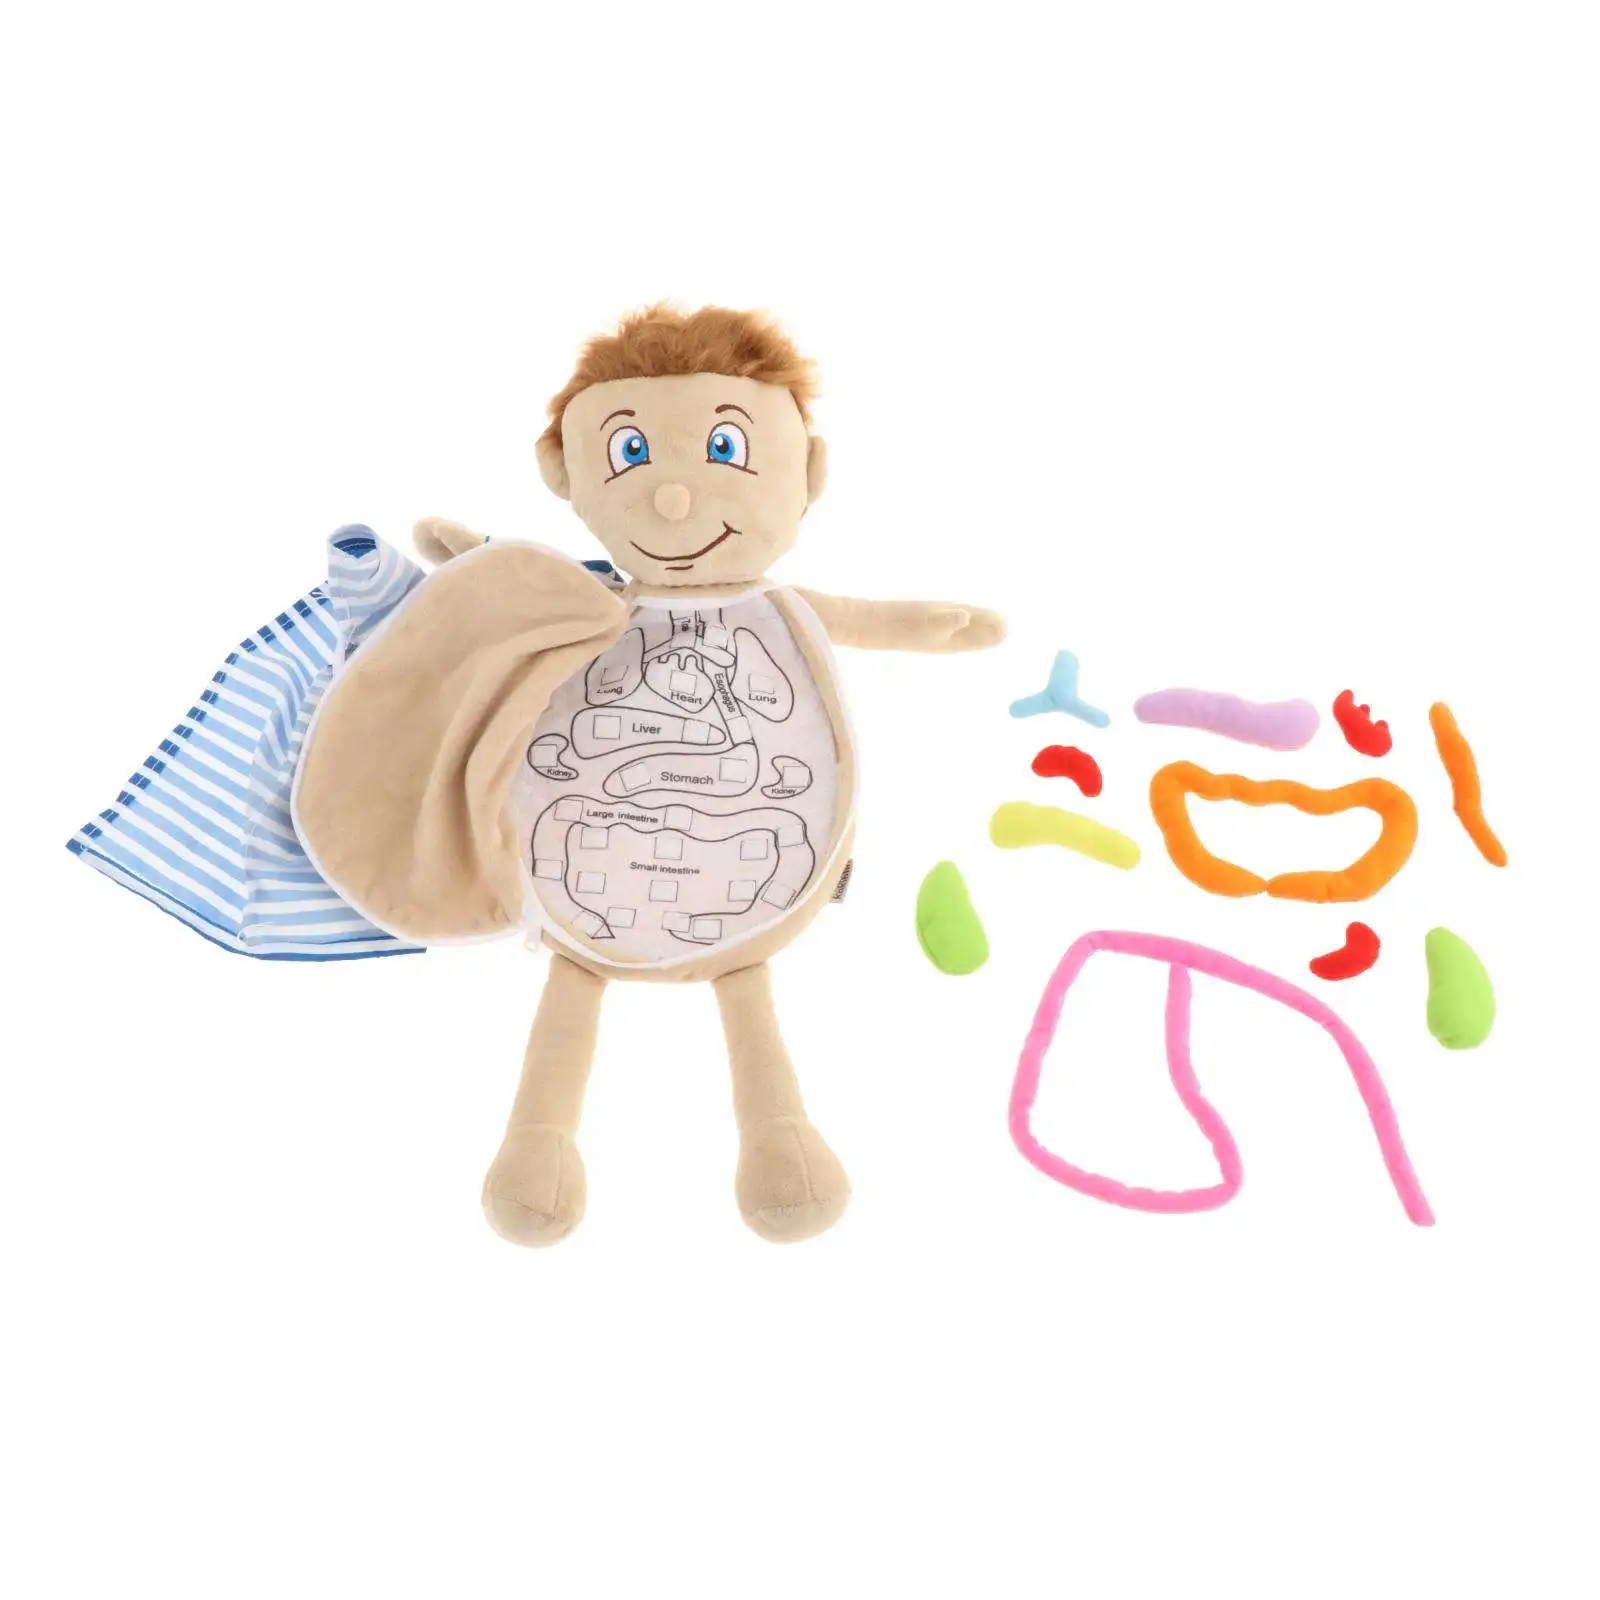 Human Body Anatomy Toy Teaching Tool 3D Puzzle for Preschool Children Kids